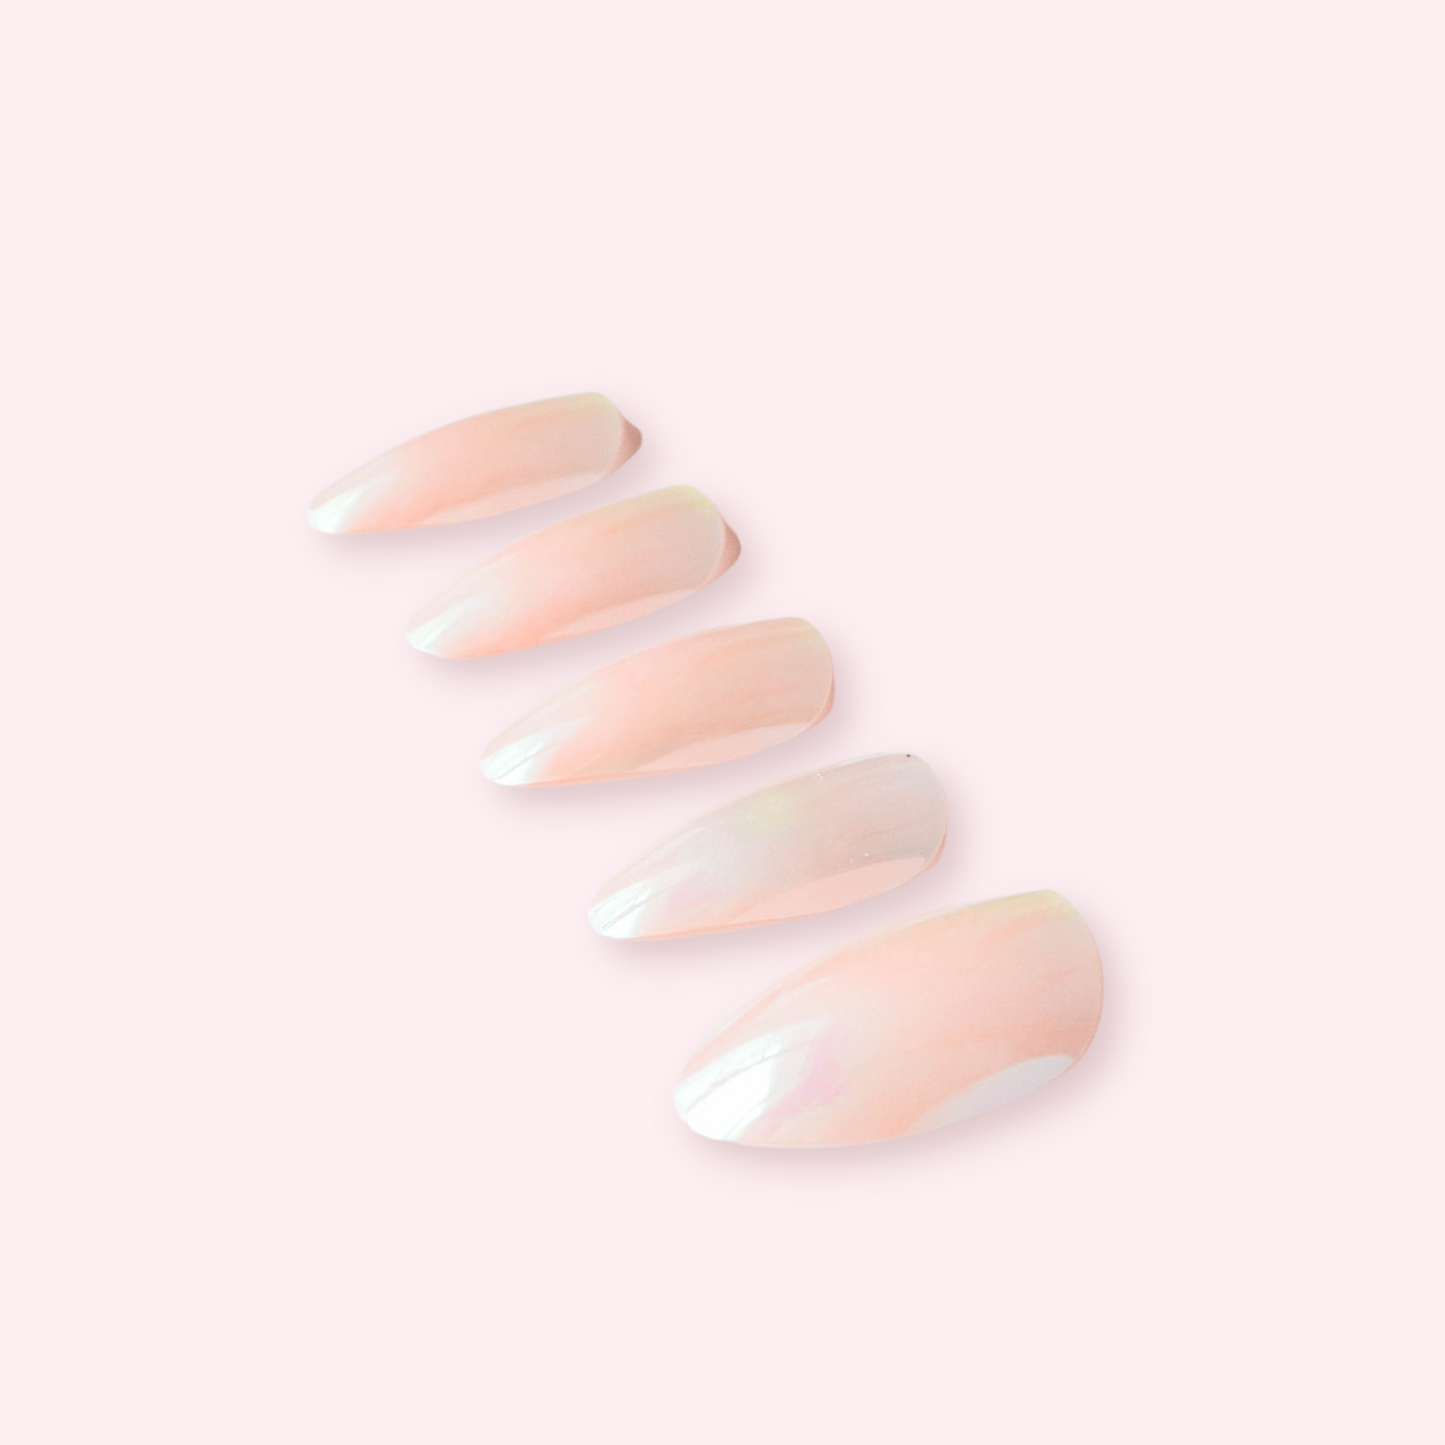 Hailey Glazed Medium Almond Pearl Press On Nails